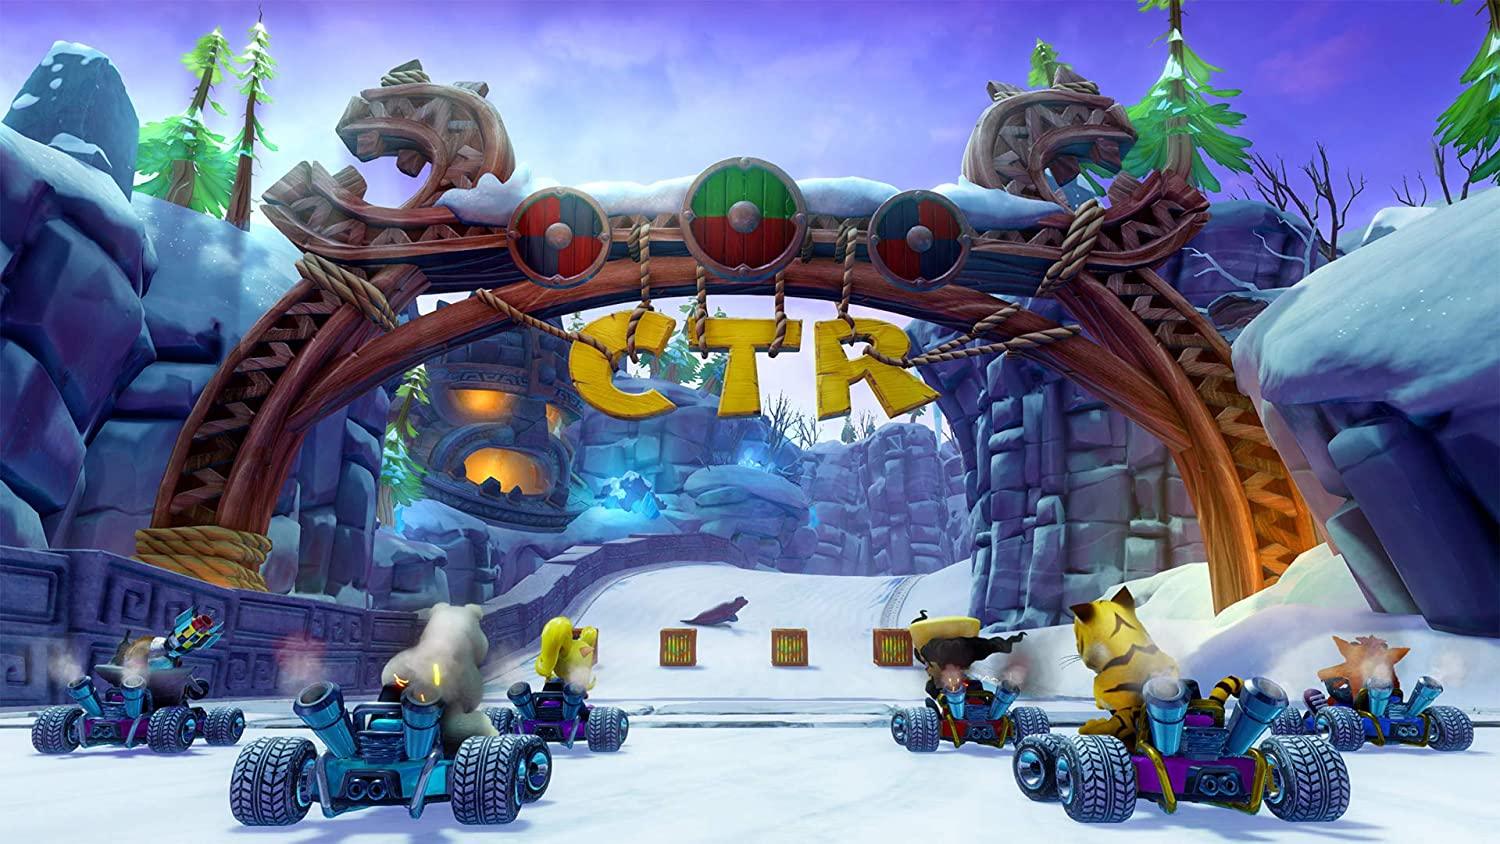 Crash Team Racing - Nitro Fueled (Nintendo Switch)-Video Game Software-dealsplant